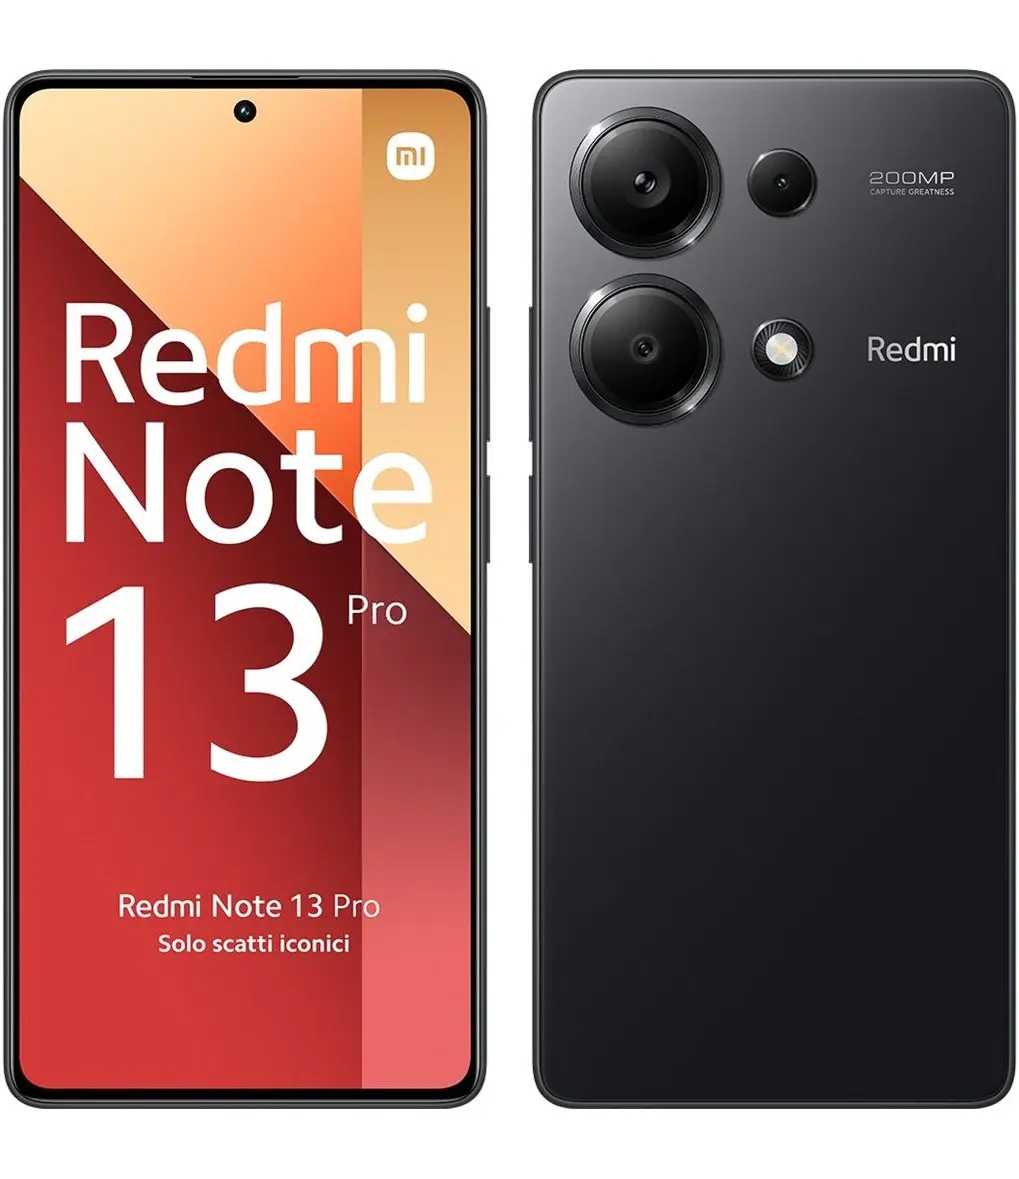 Redmi Note 13 4G